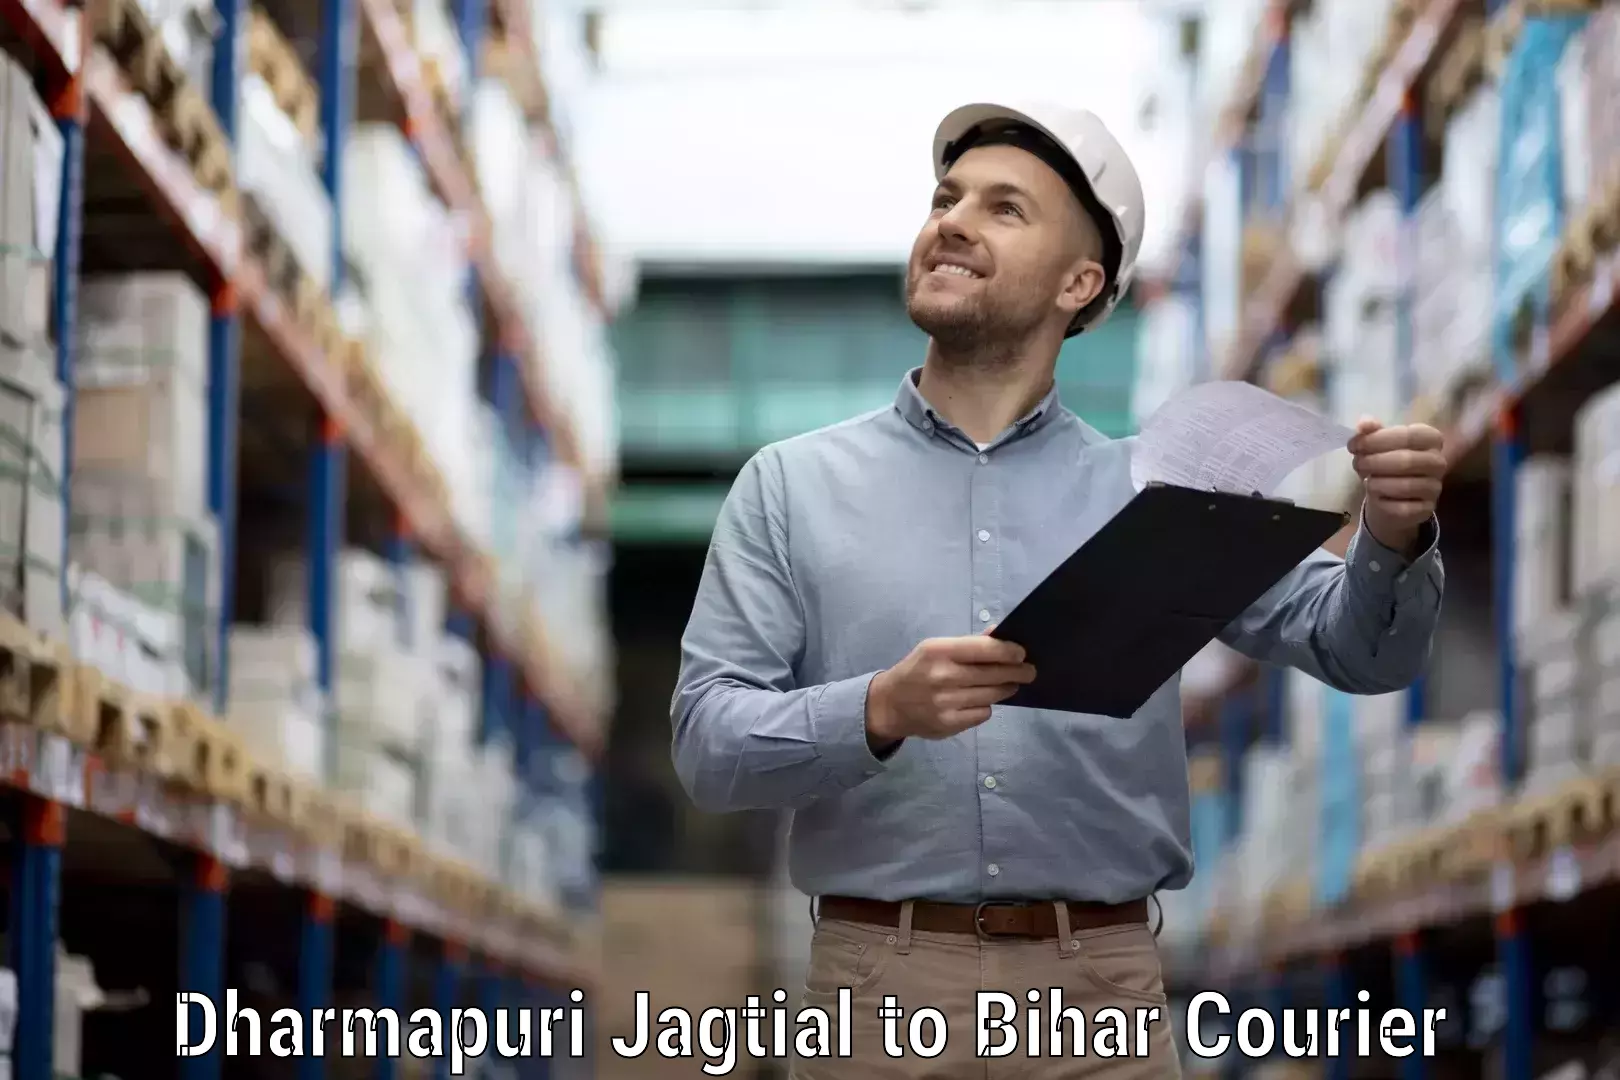 Reliable courier service Dharmapuri Jagtial to Bihta